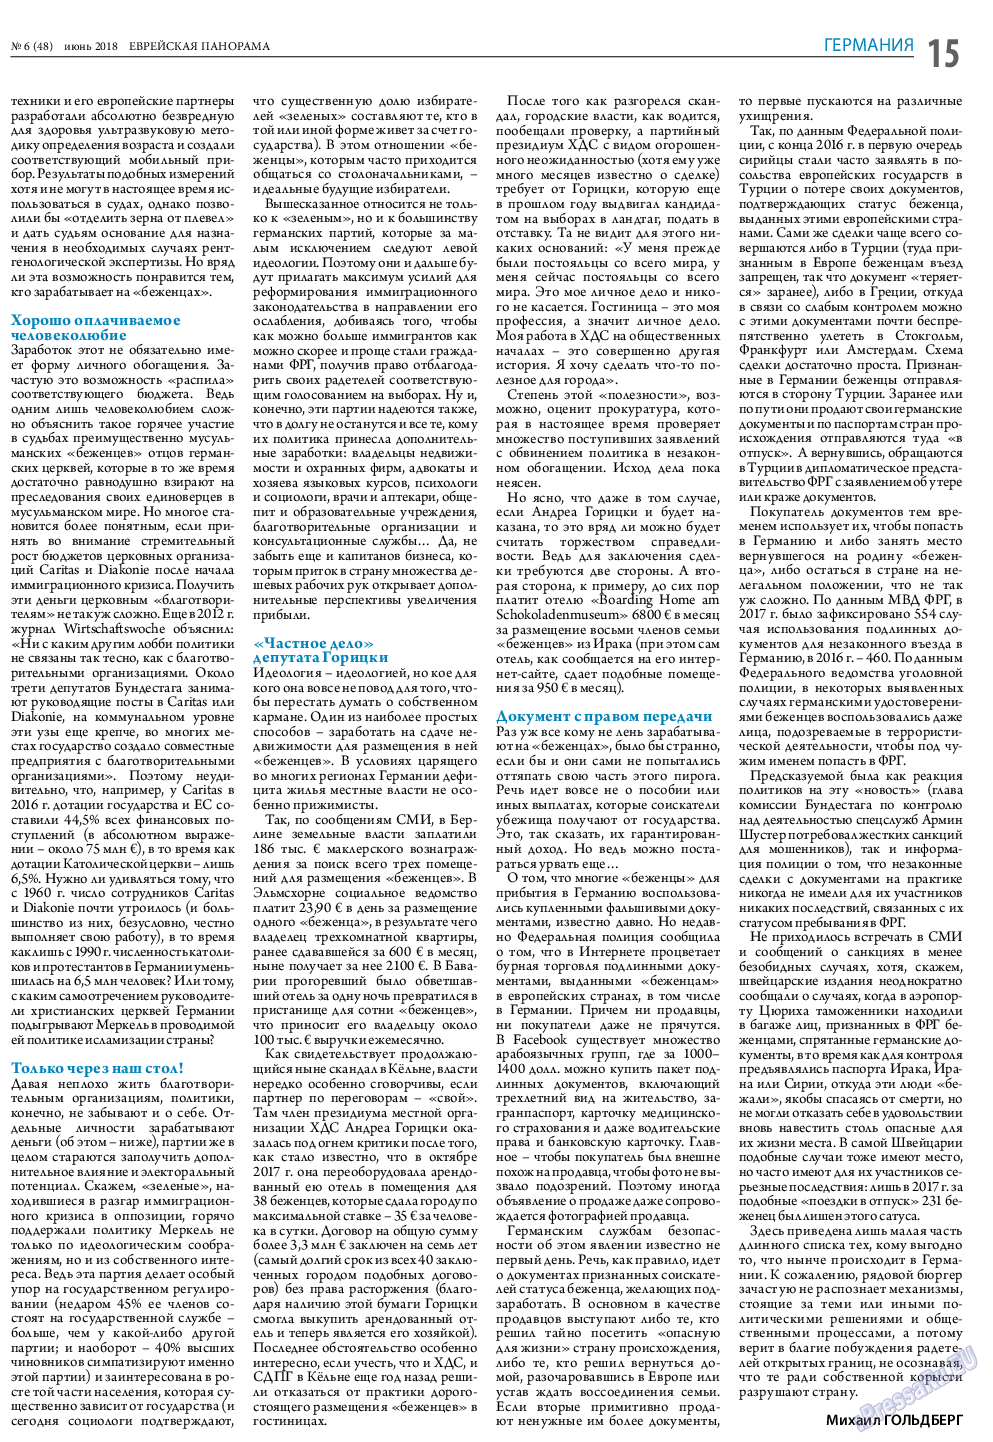 Еврейская панорама, газета. 2018 №6 стр.15